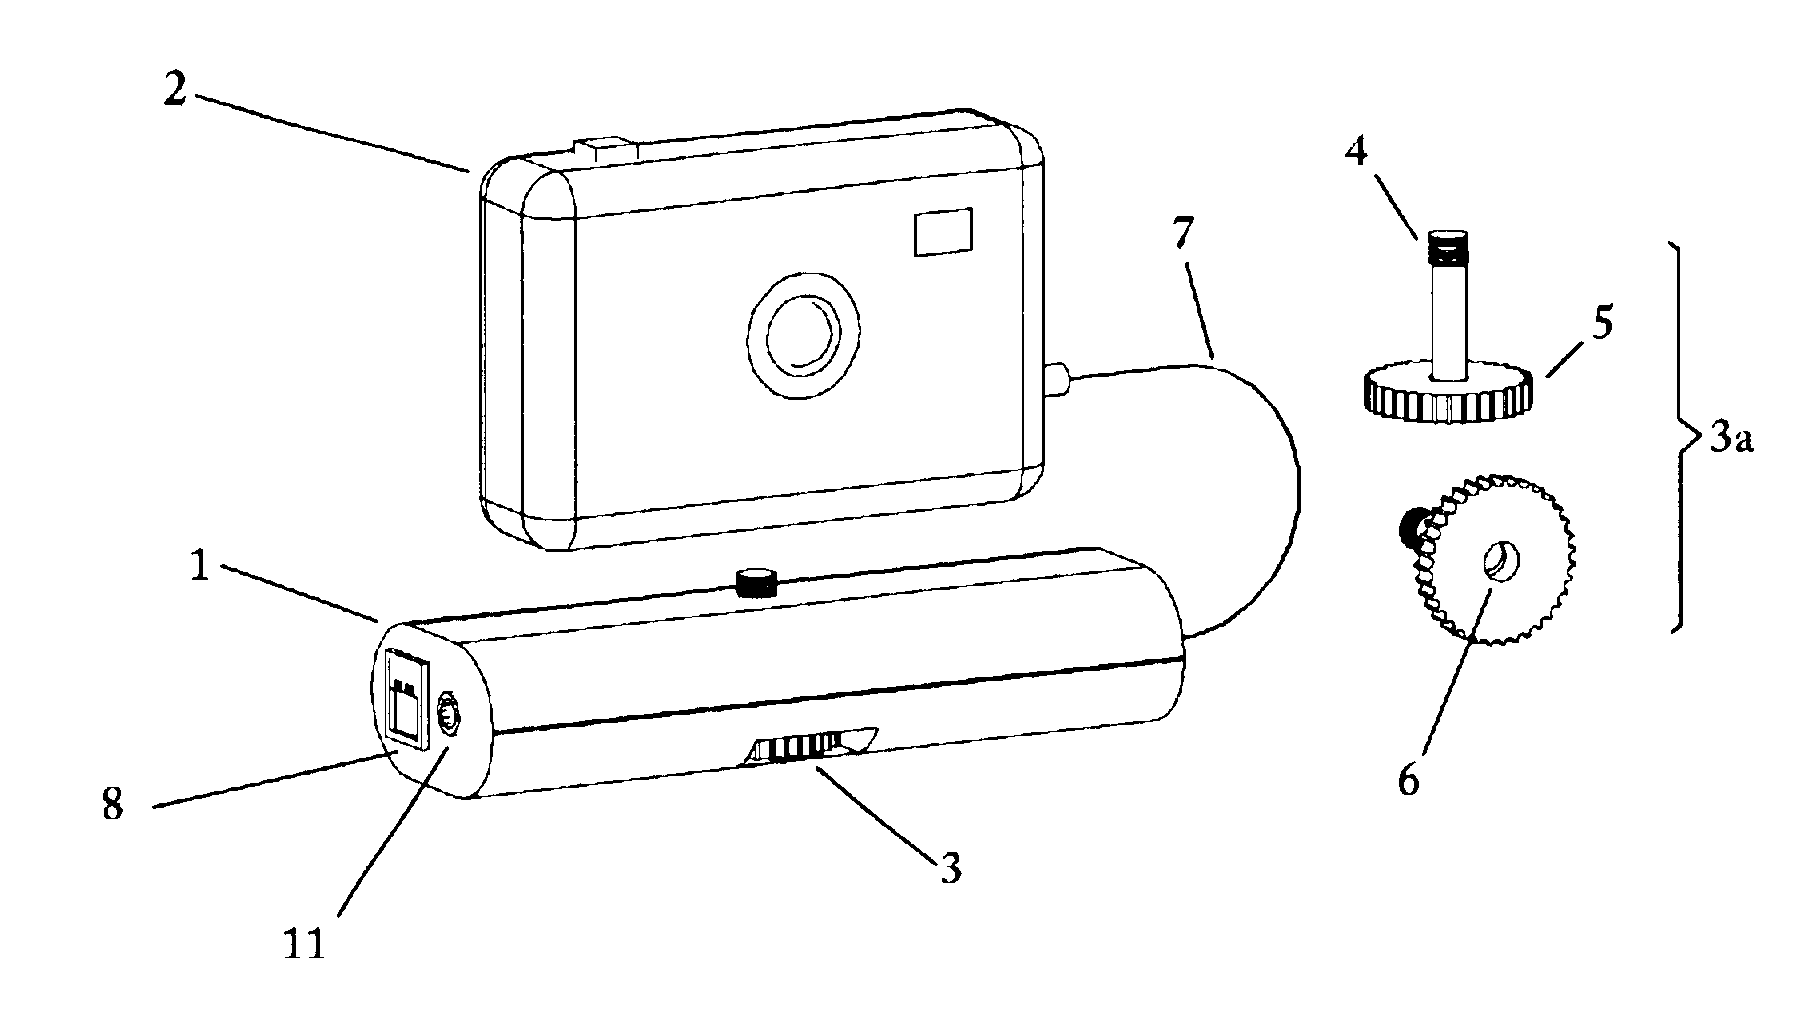 Remote camera relay controller method and apparatus